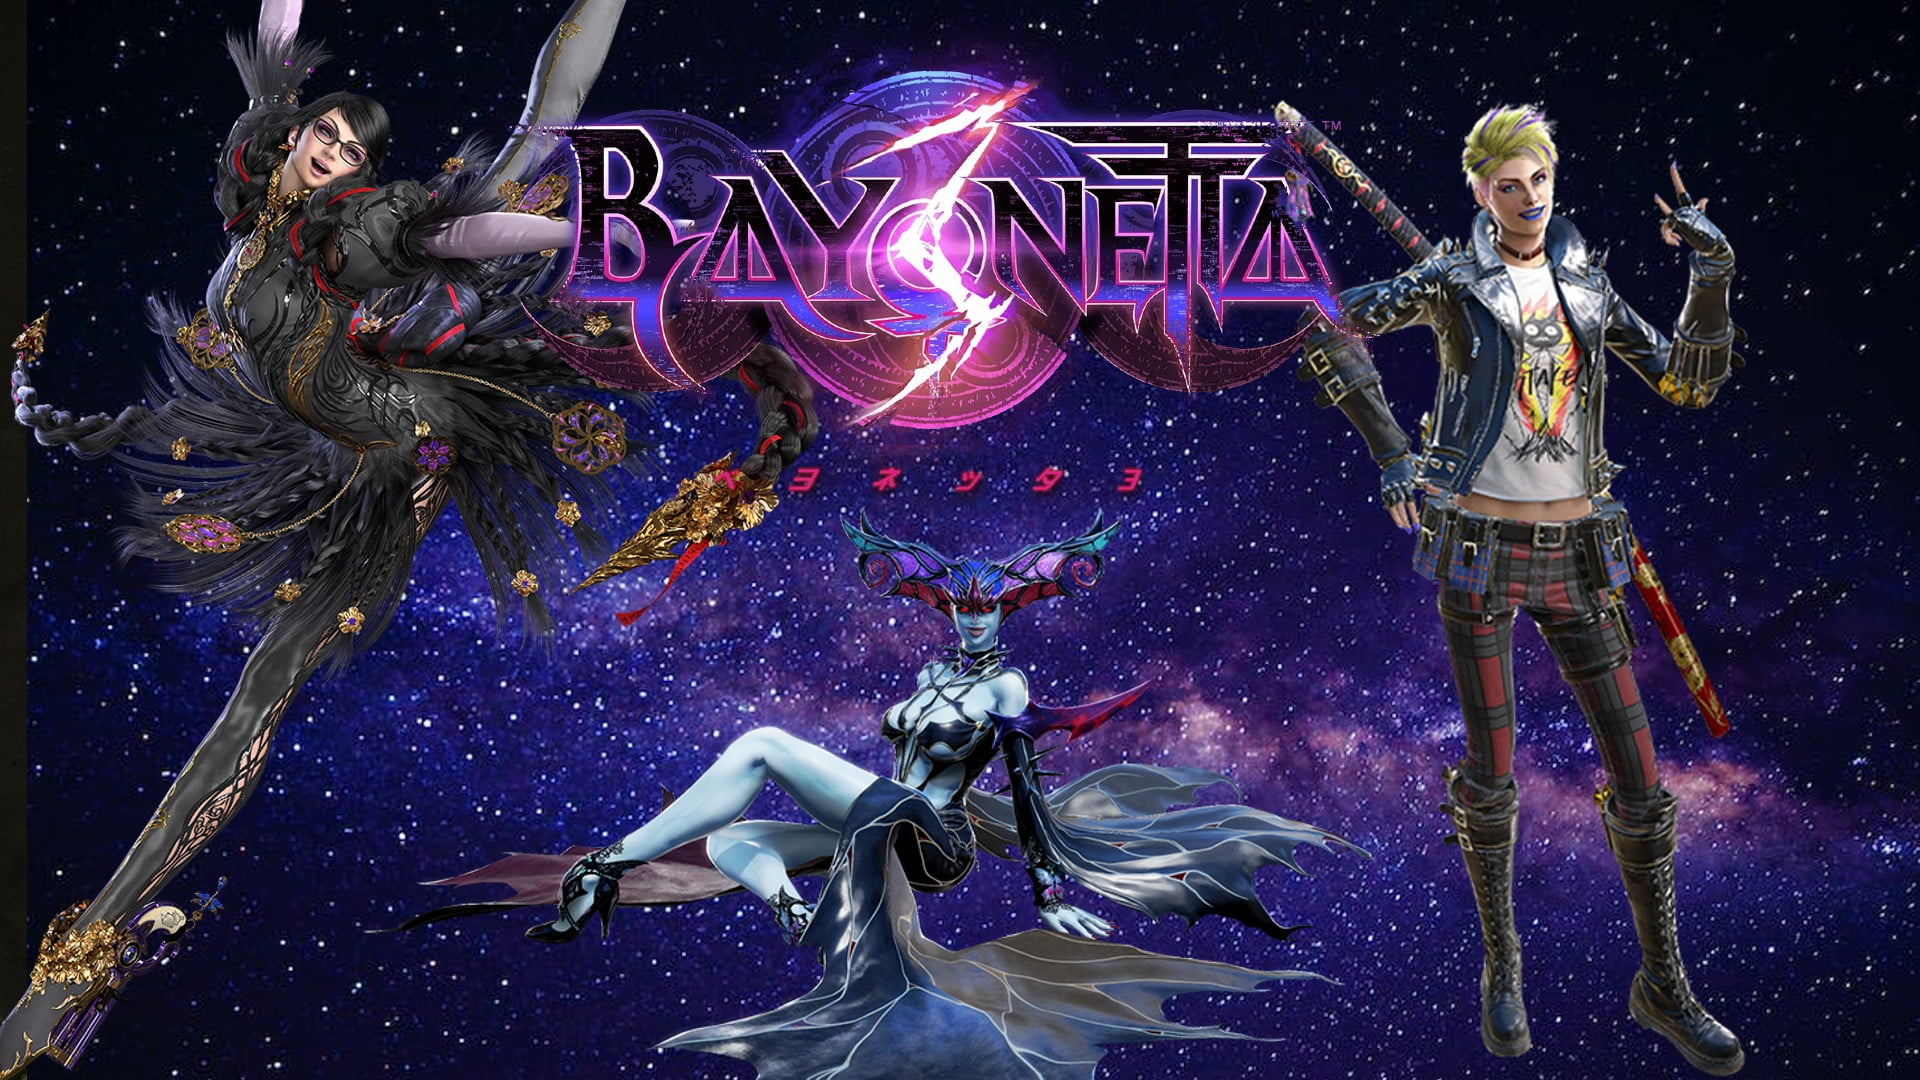 The Art Of Bayonetta 3